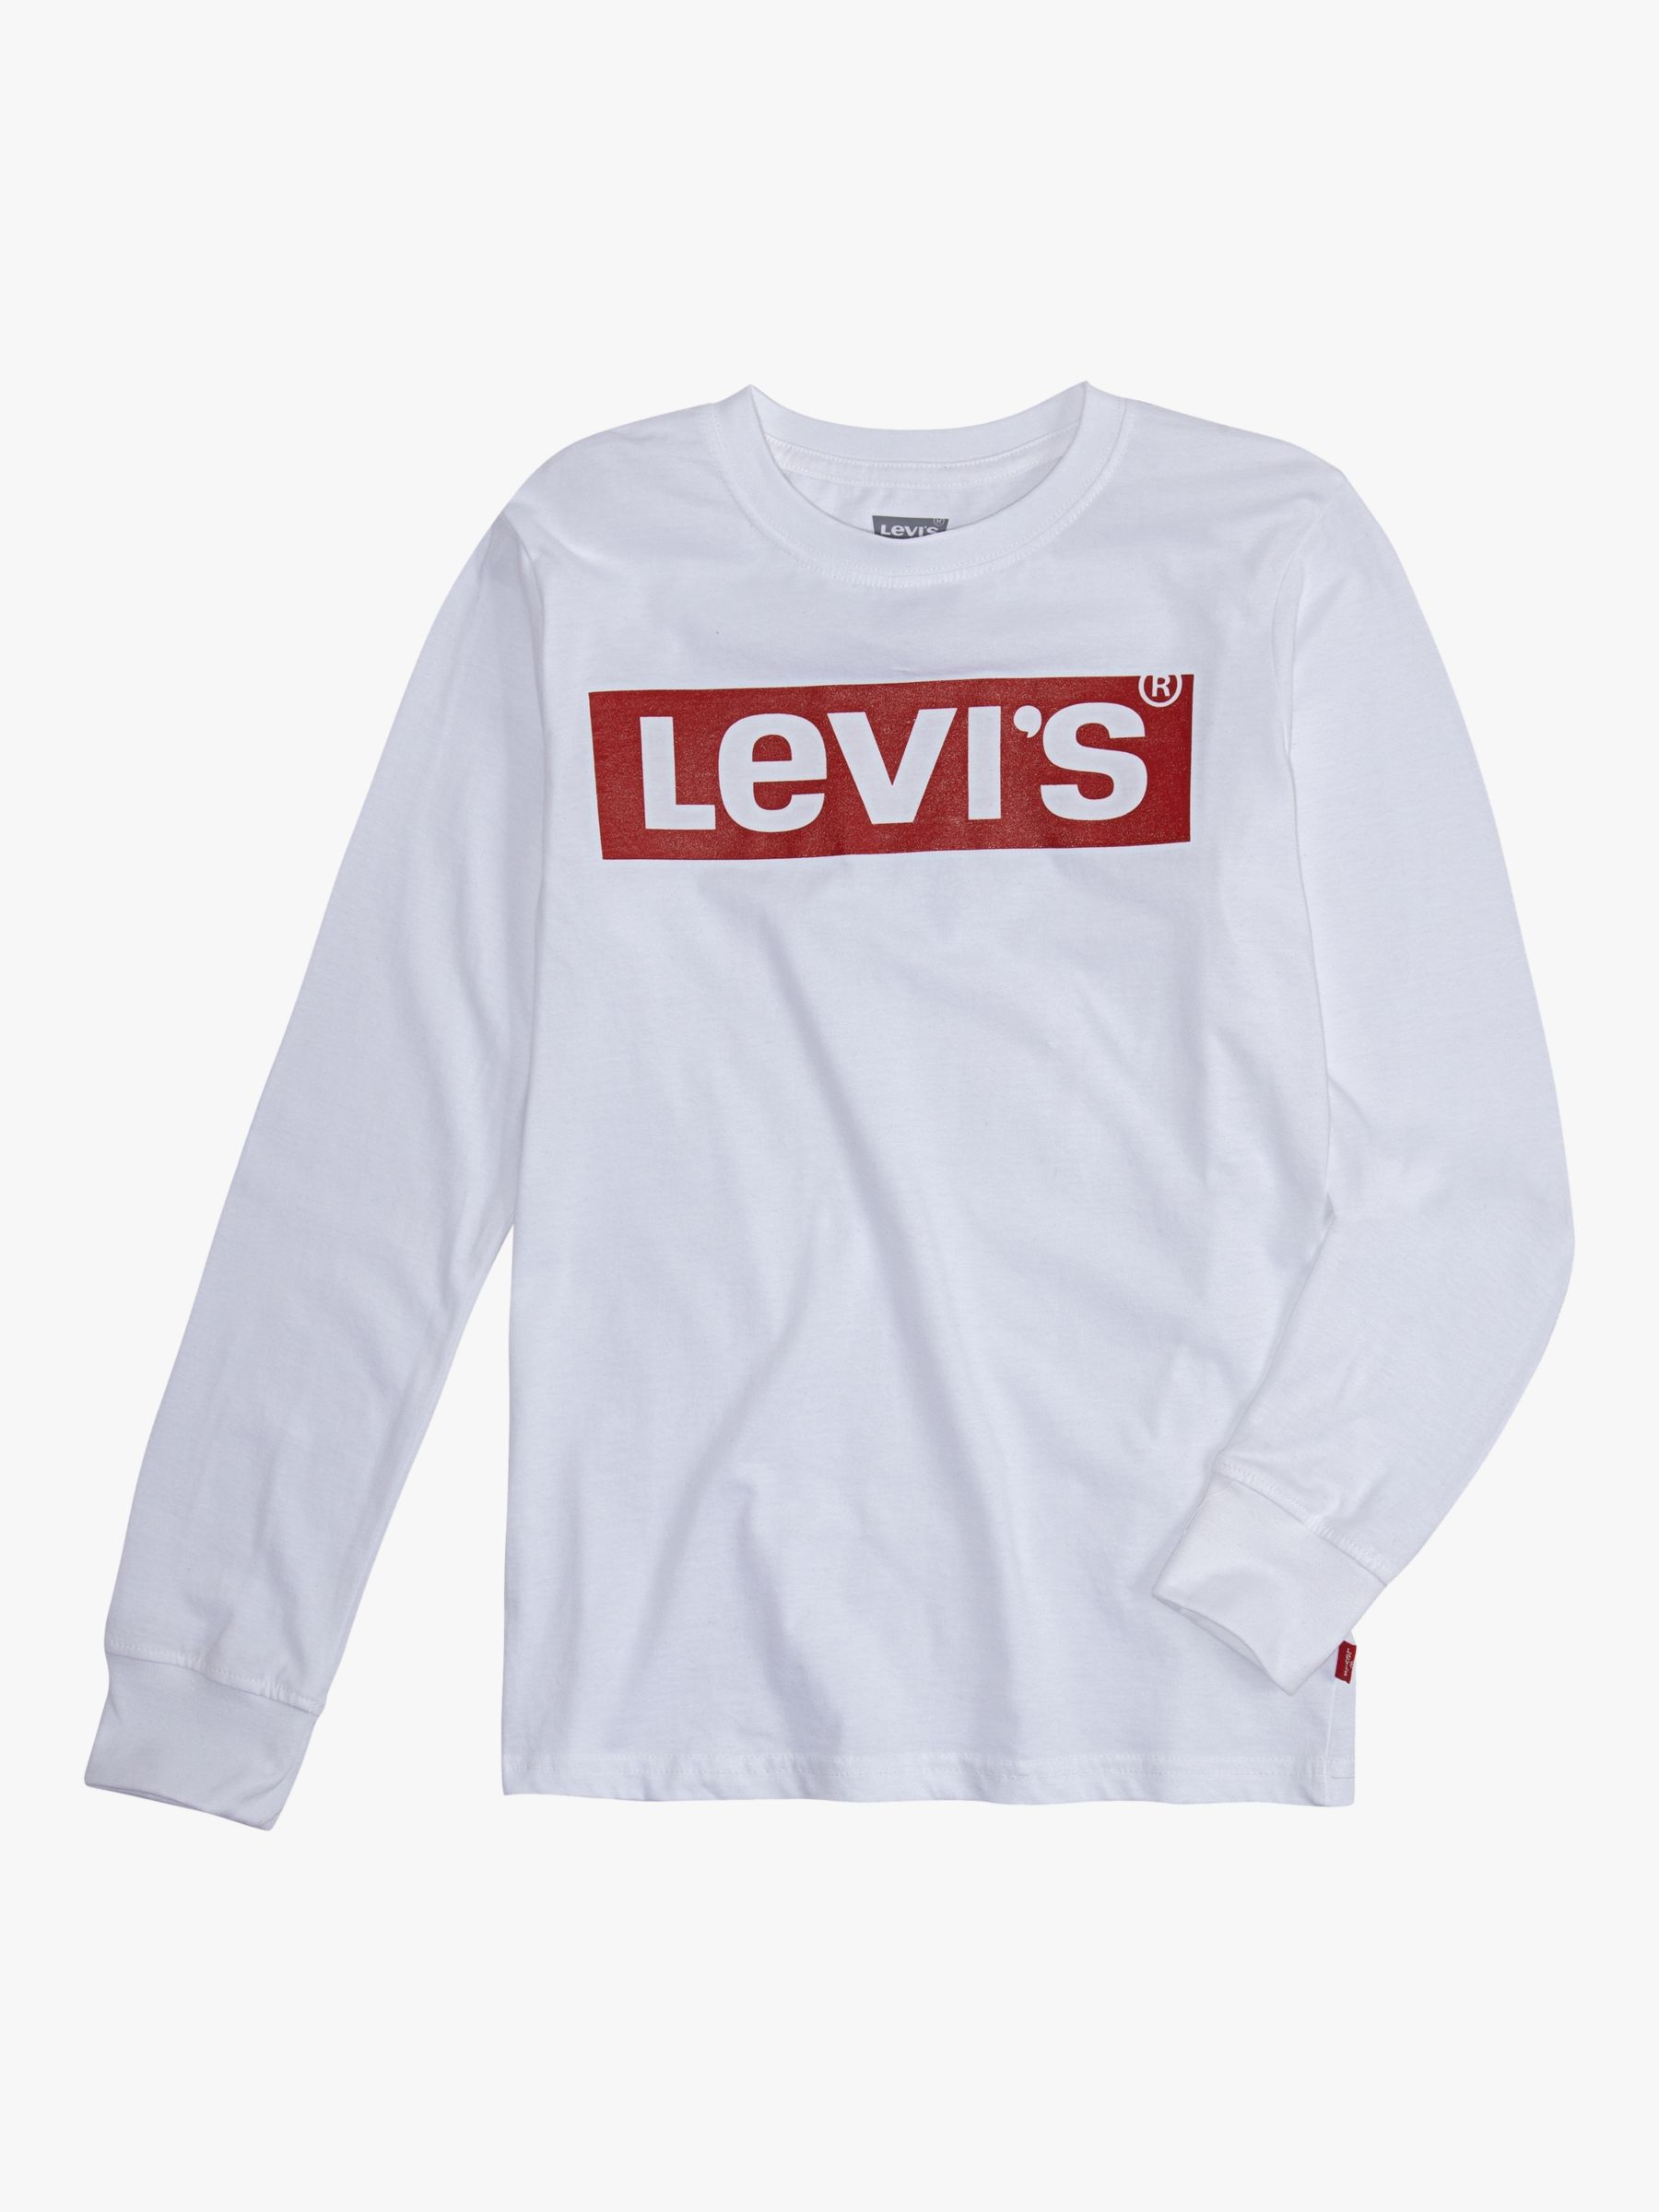 Levi's | John Lewis & Partners